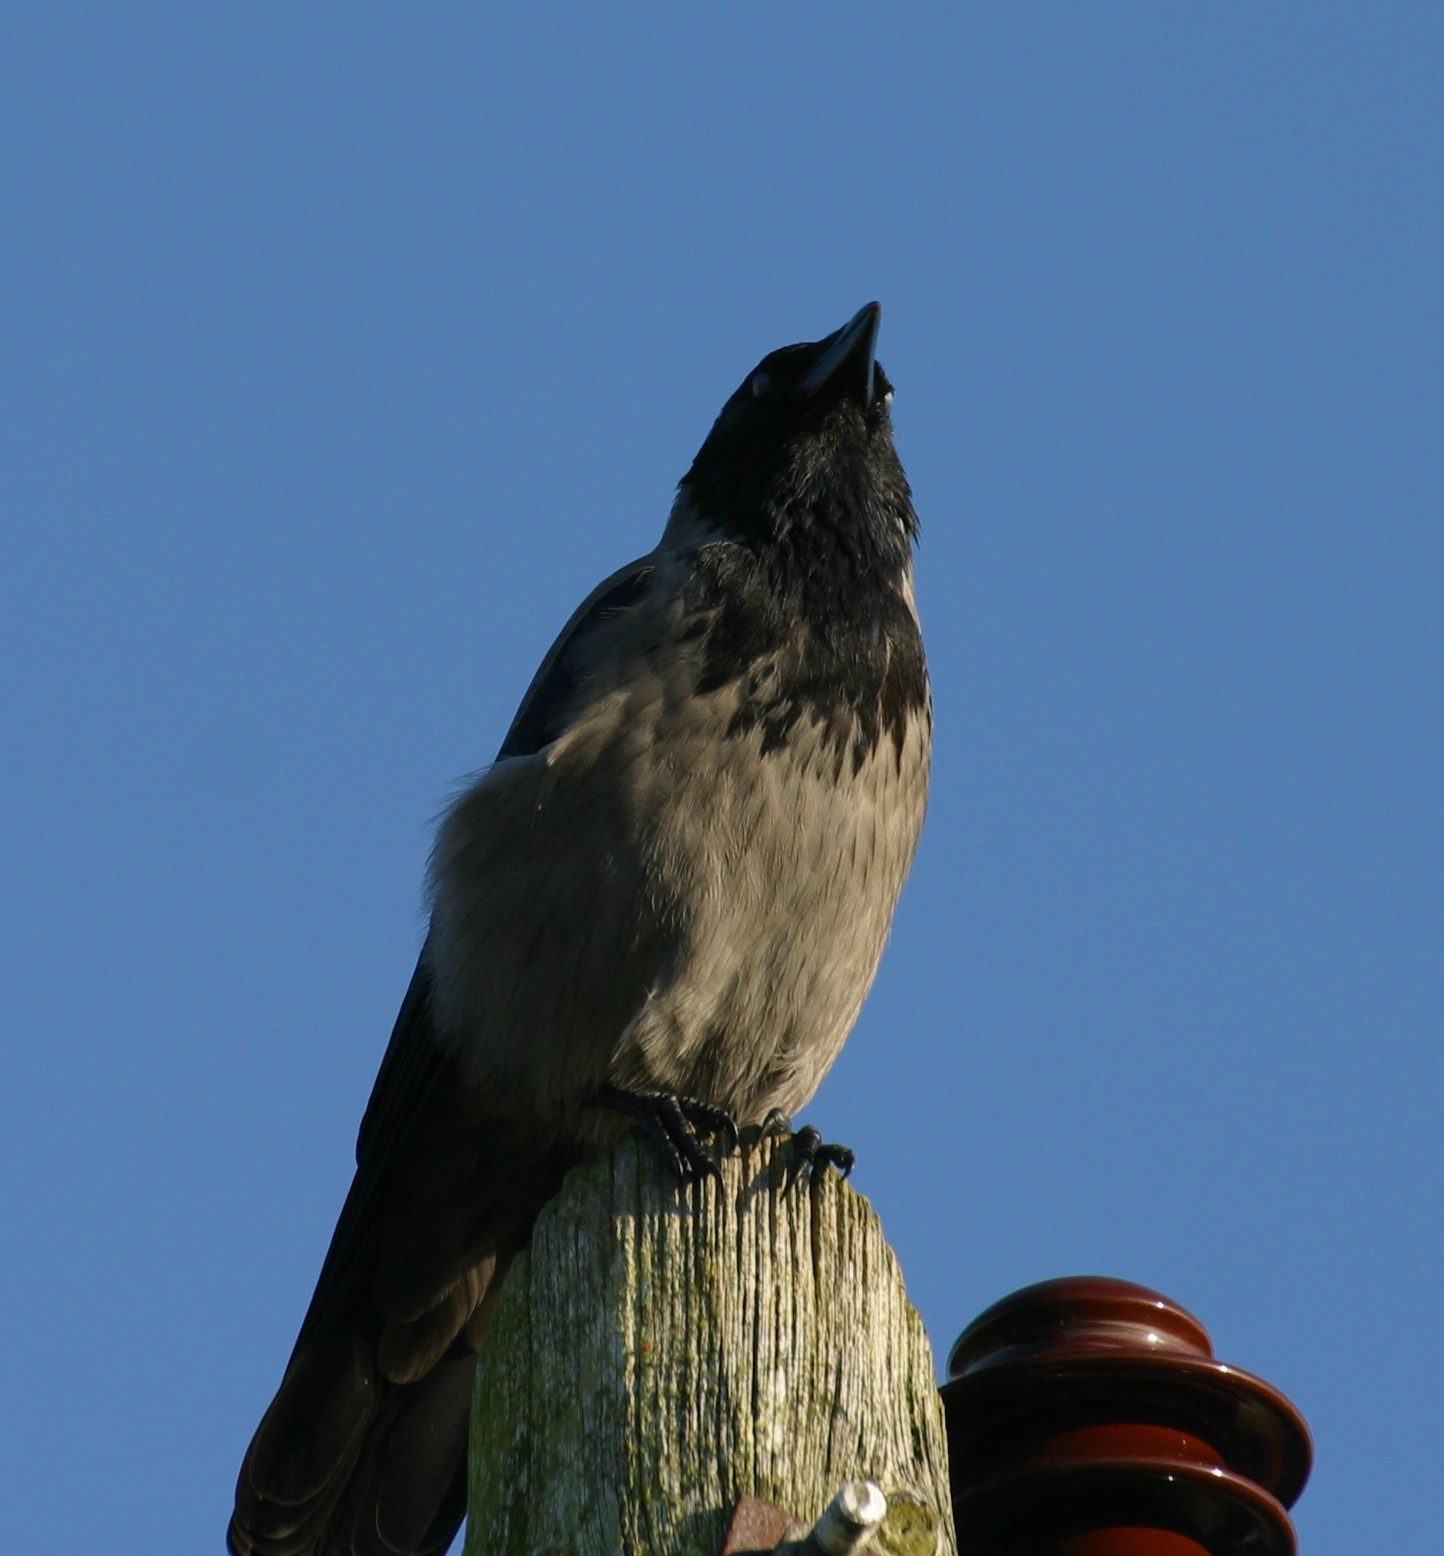 Hooded Crow on Telephone Pole